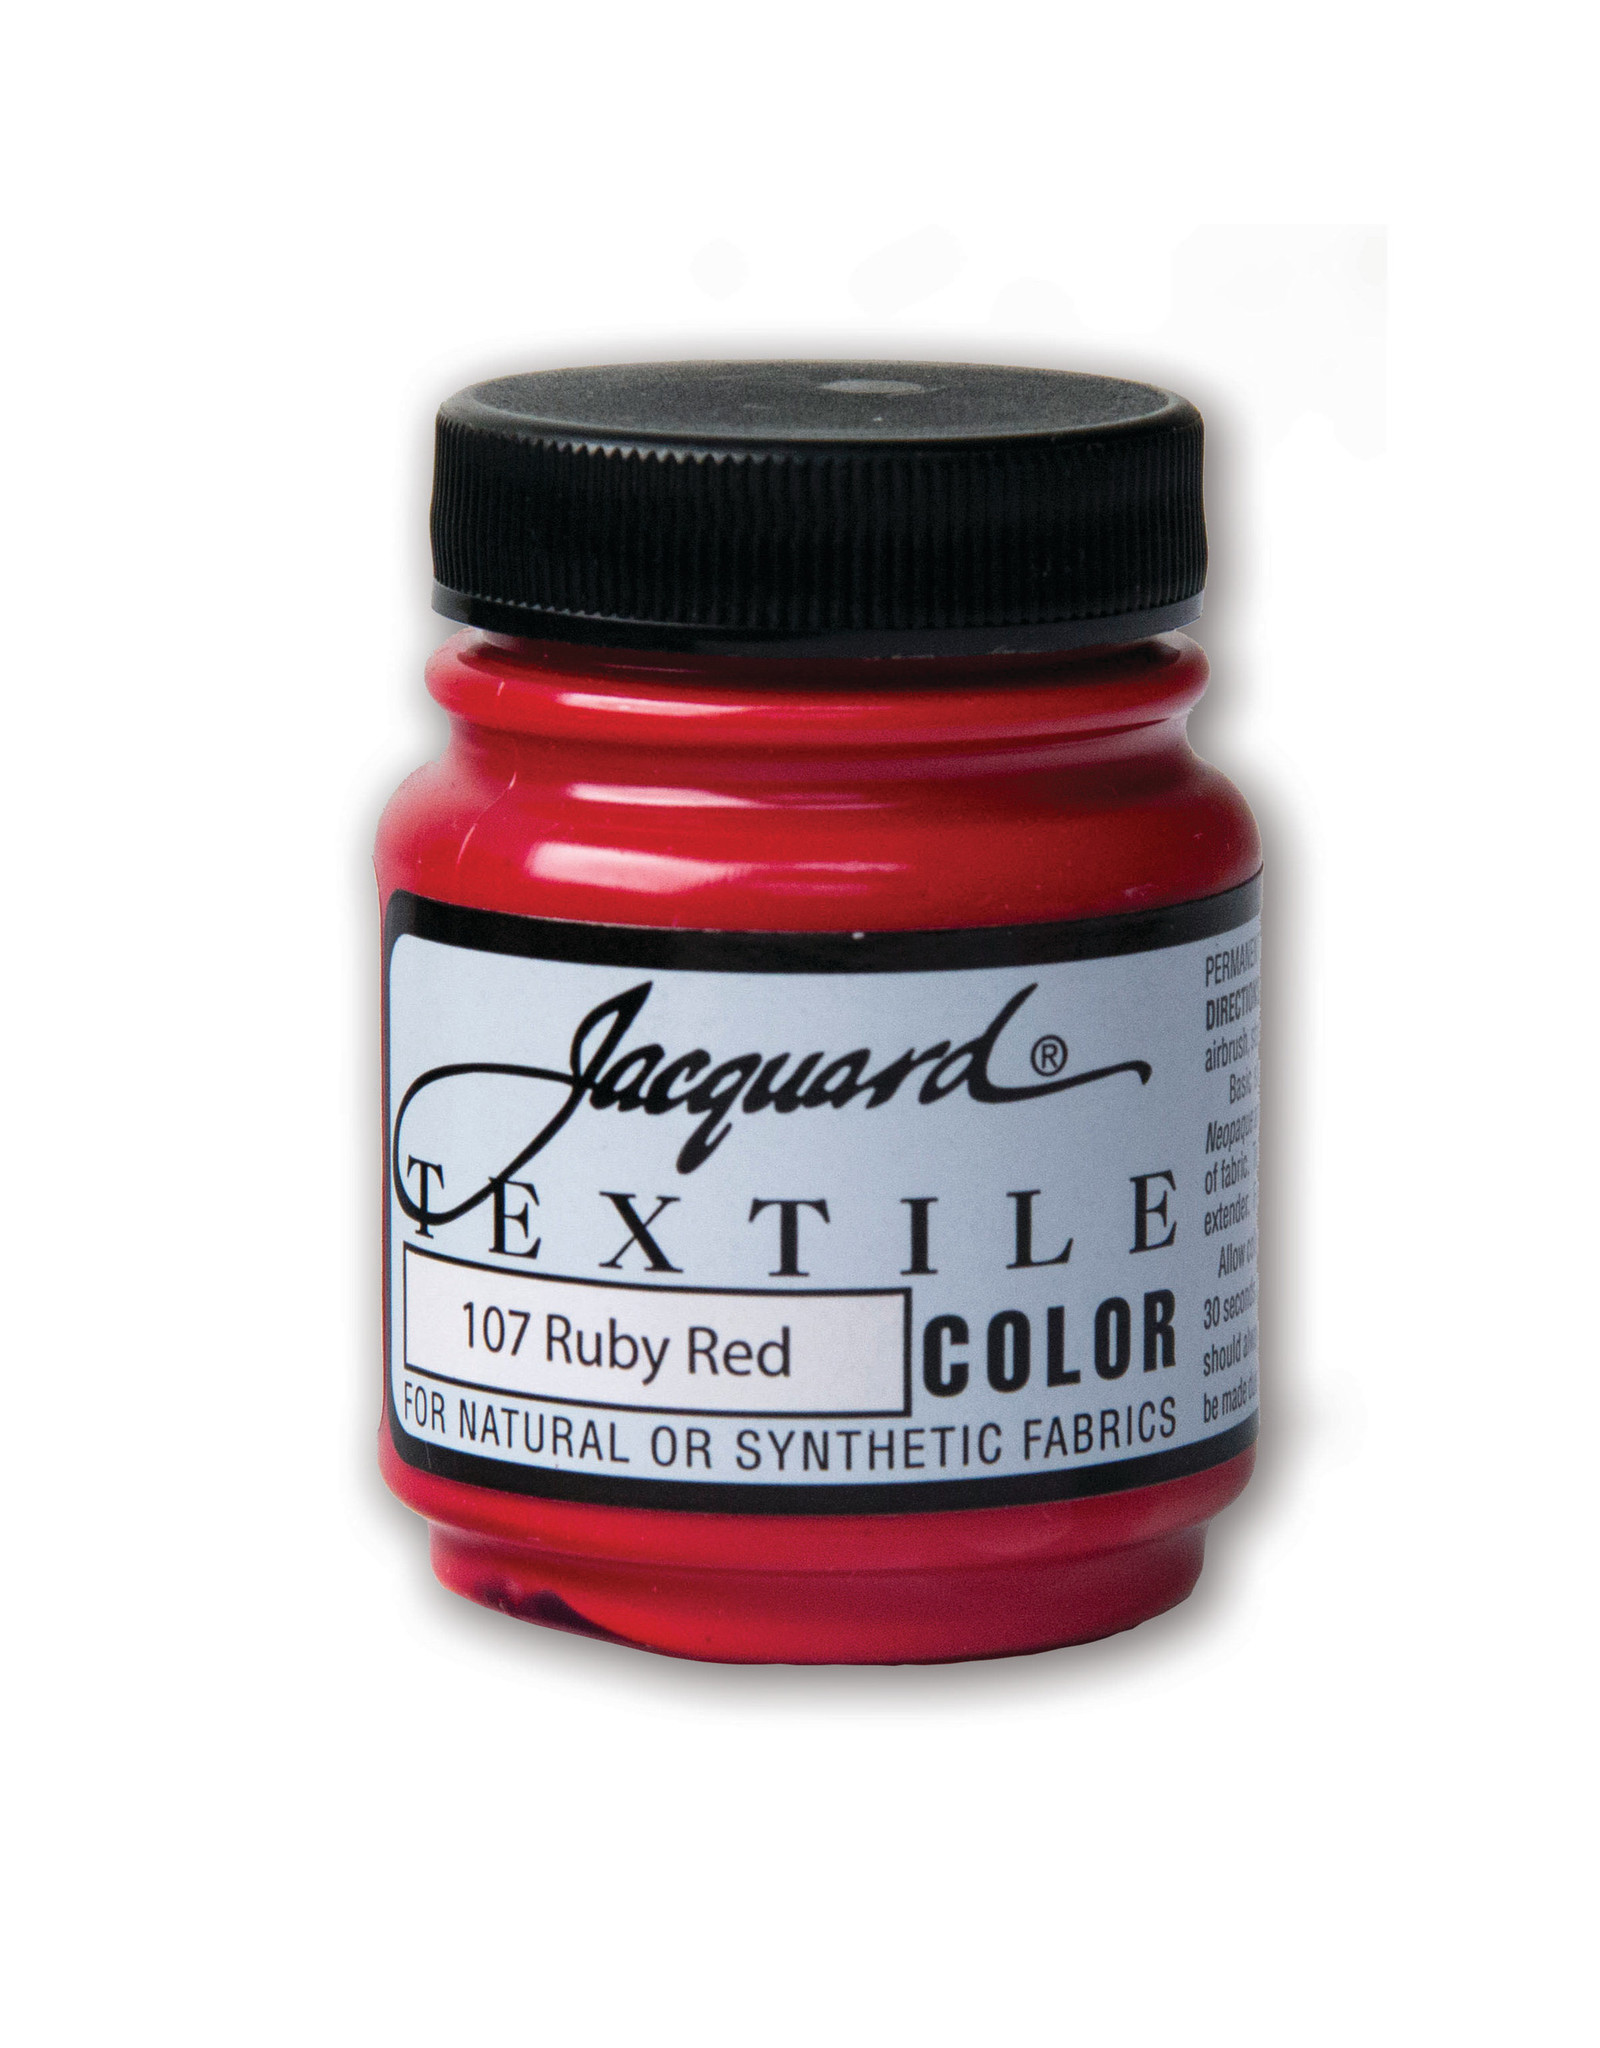 Jacquard Jacquard Textile Color, #107 Ruby Red